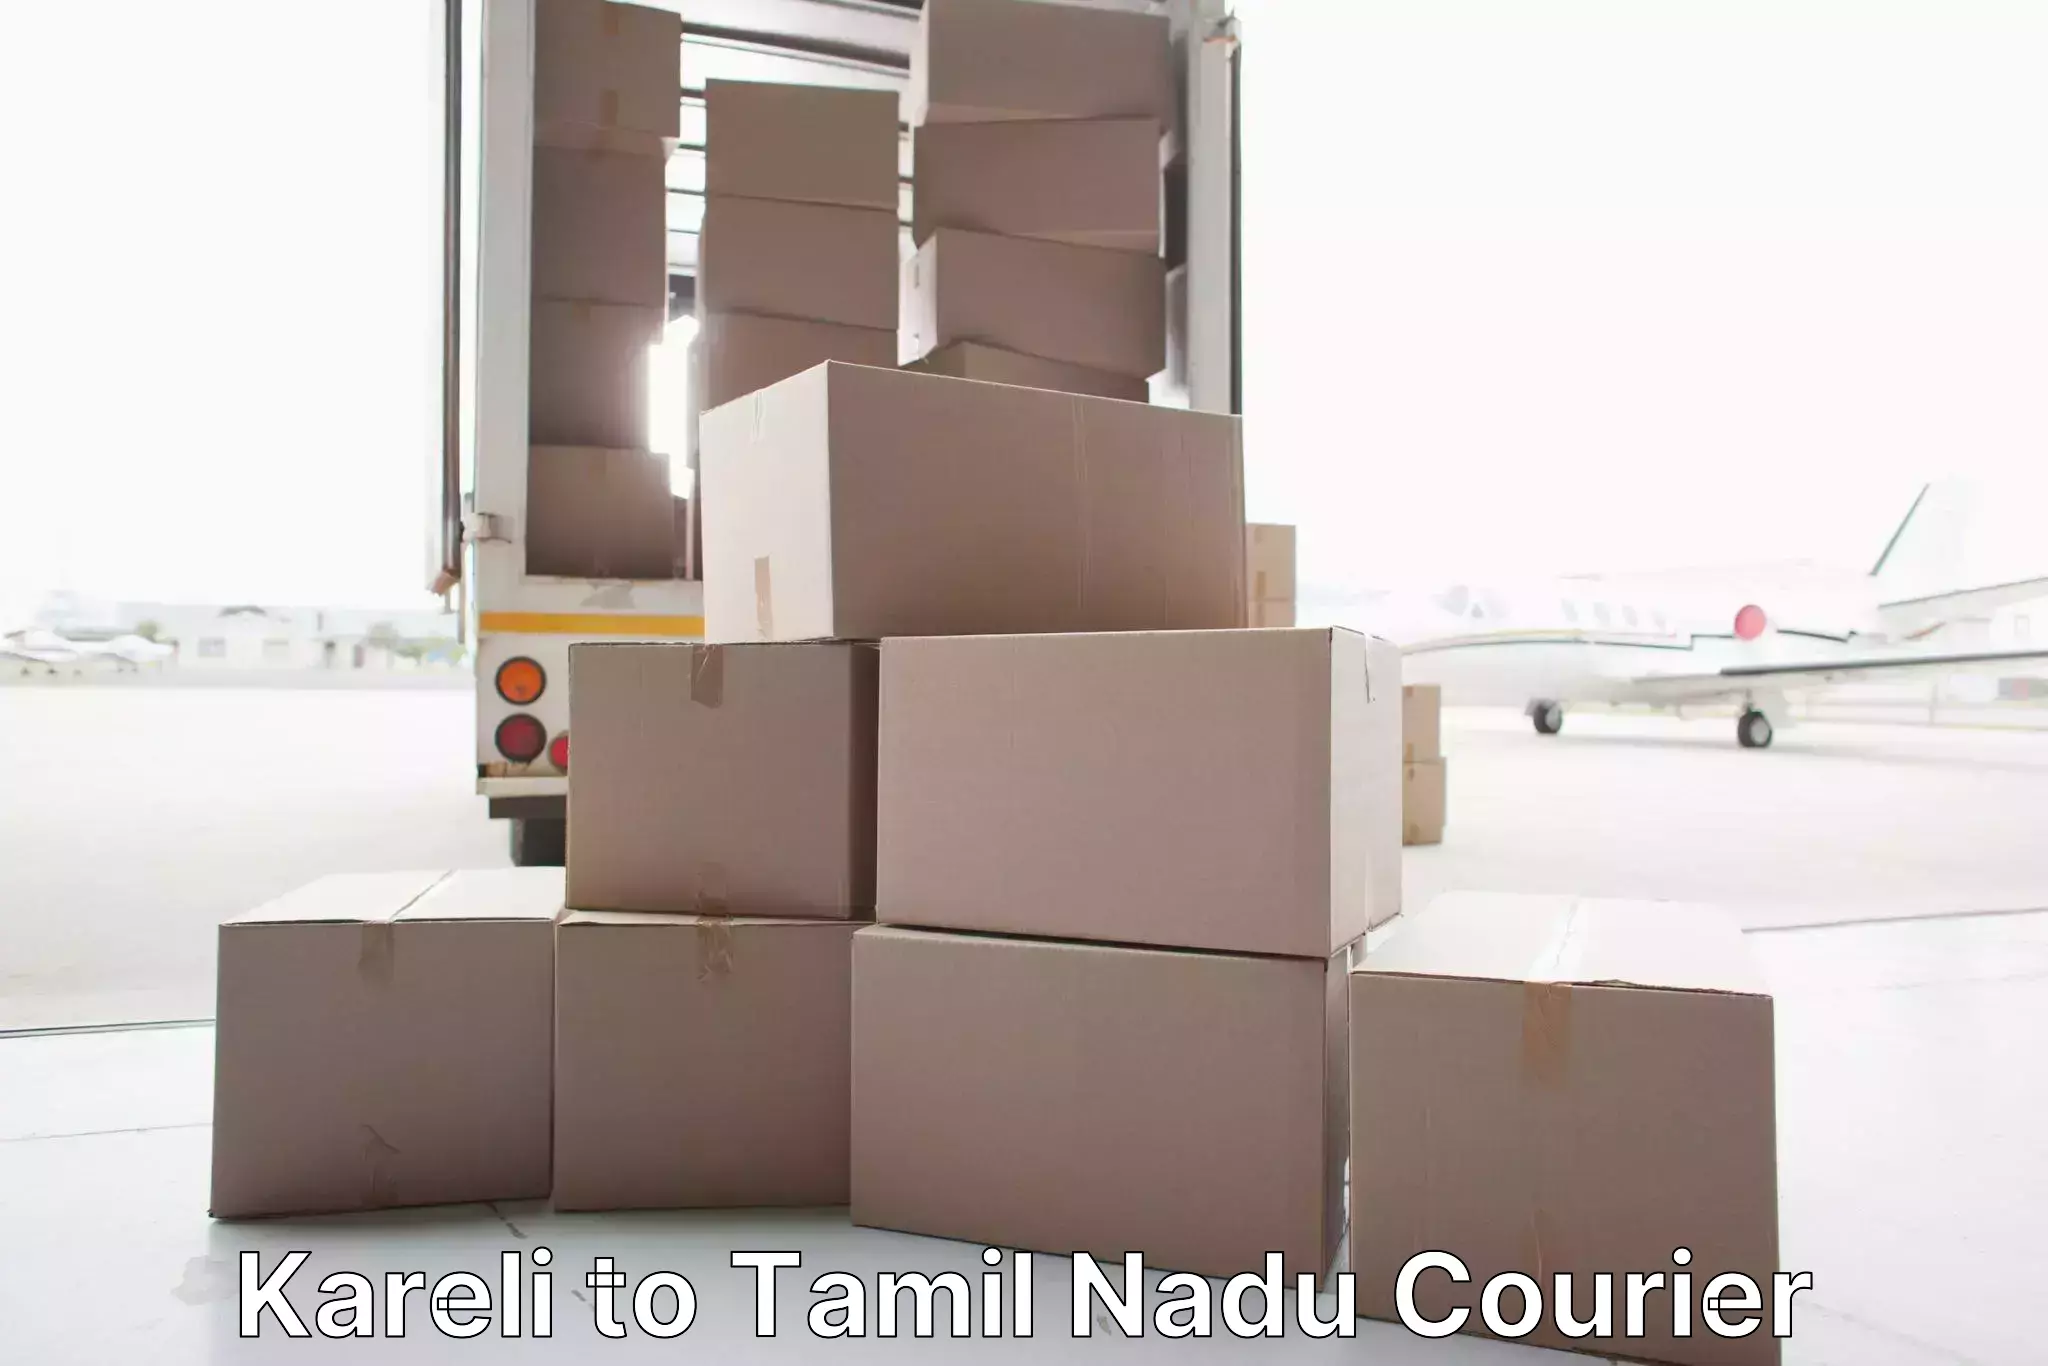 Quality relocation services in Kareli to Tamil Nadu